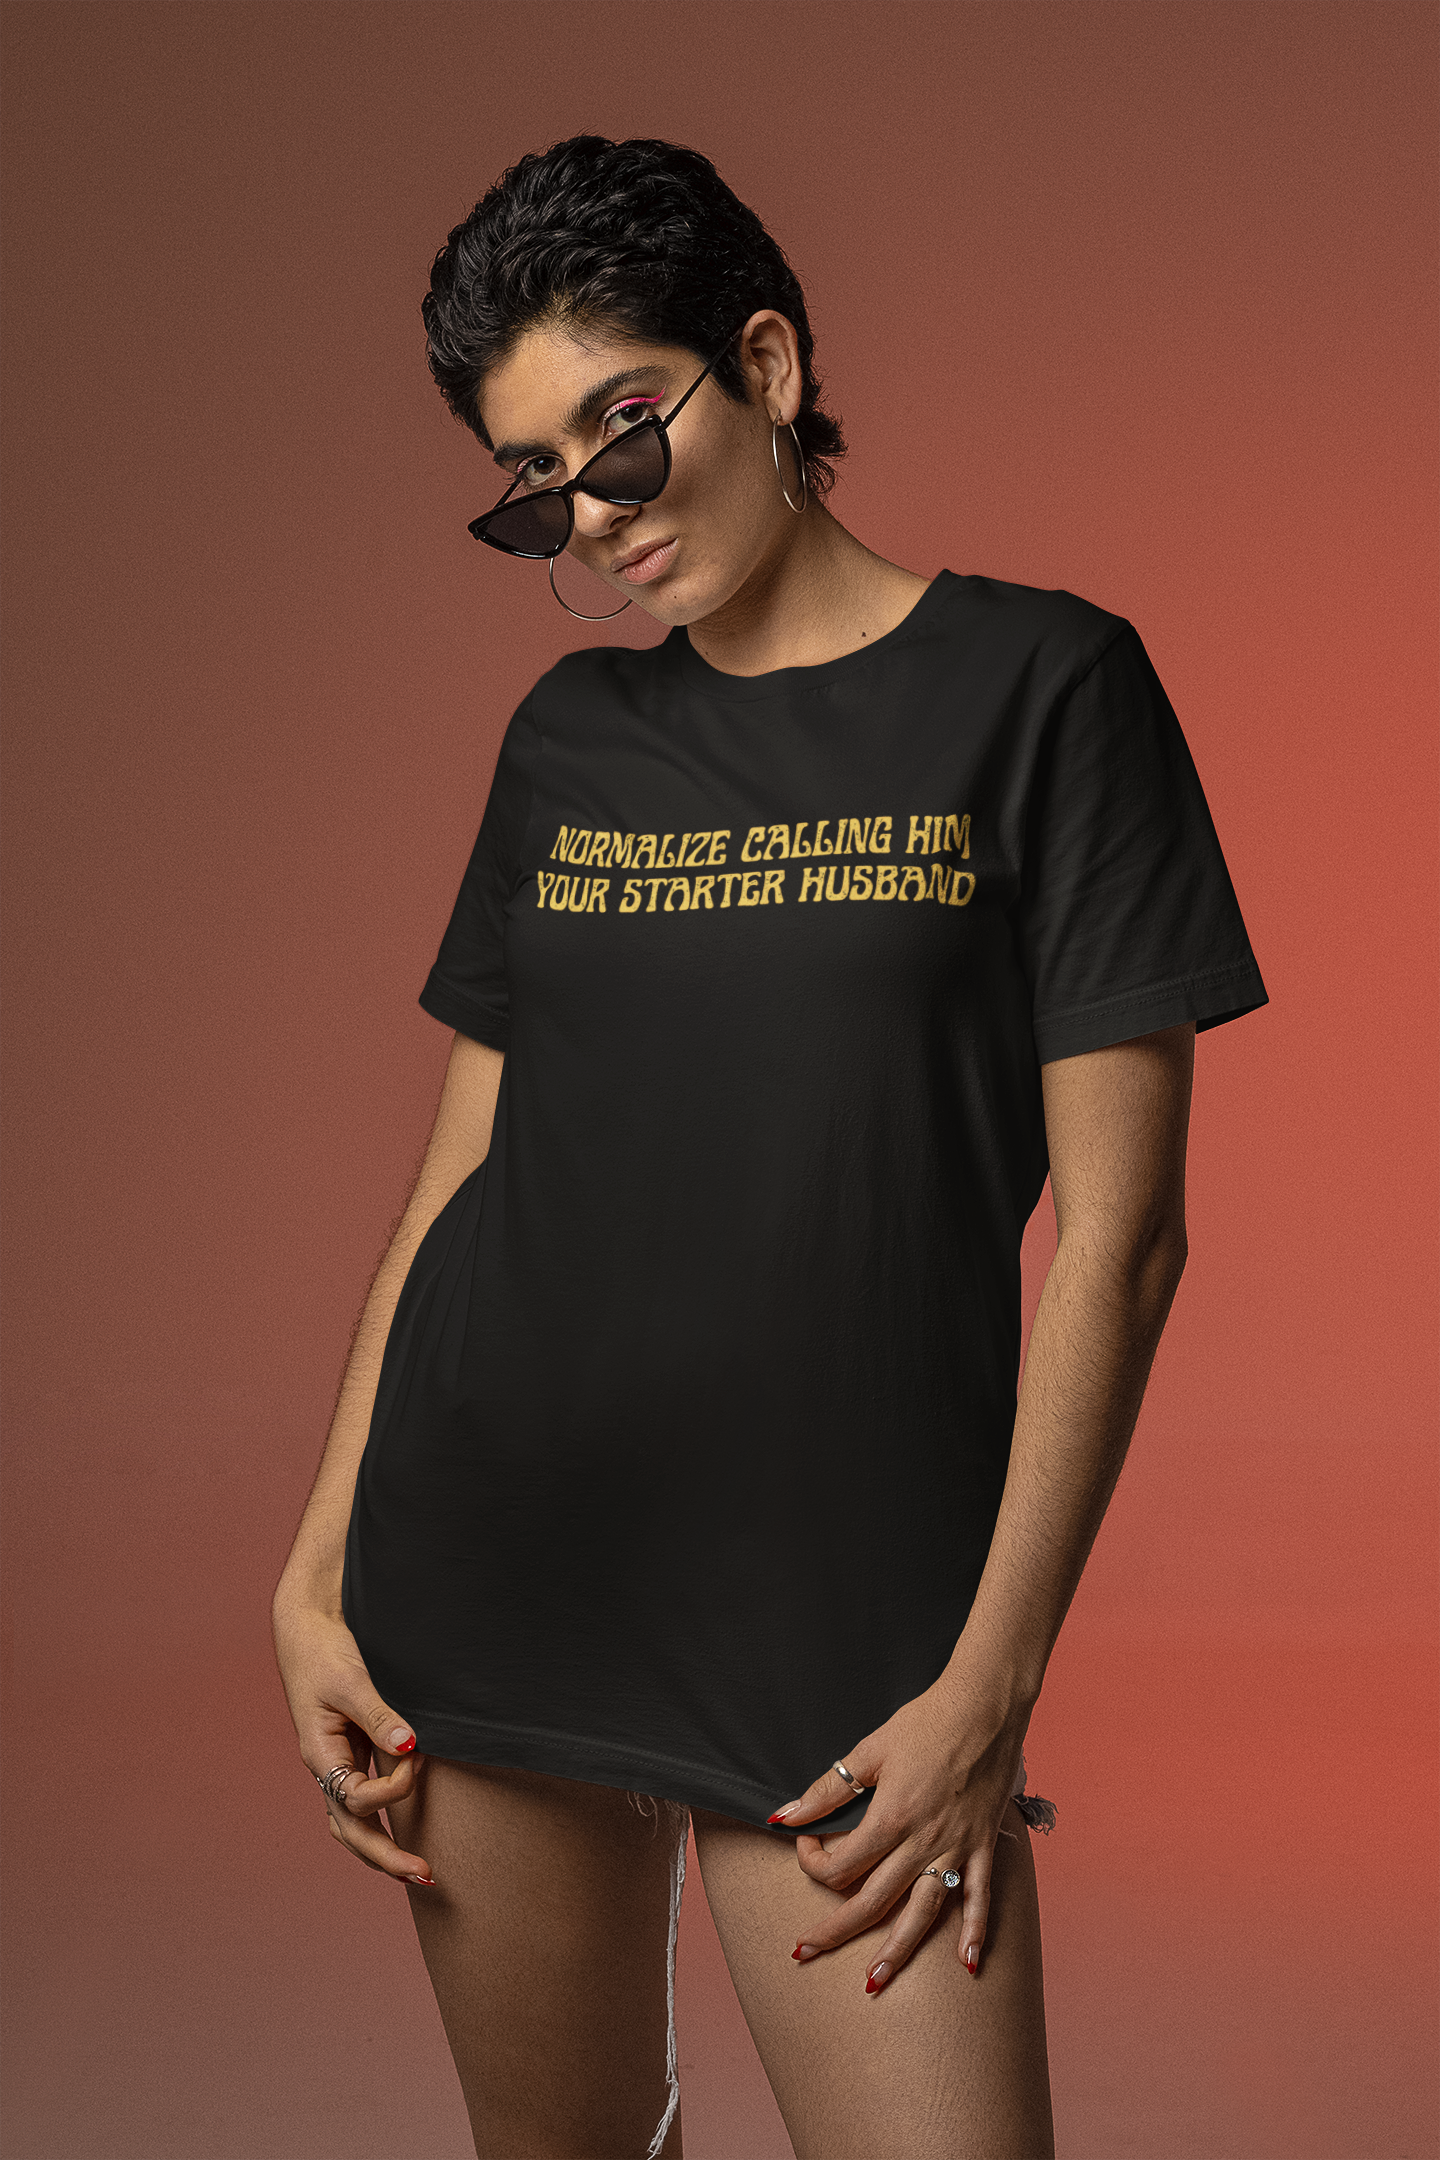 Normalize Calling Him Your Starter Husband Unisex Feminist T-shirt - Shop Women’s Rights T-shirts - Feminist Trash Store - Black Oversized Women’s T-shirt